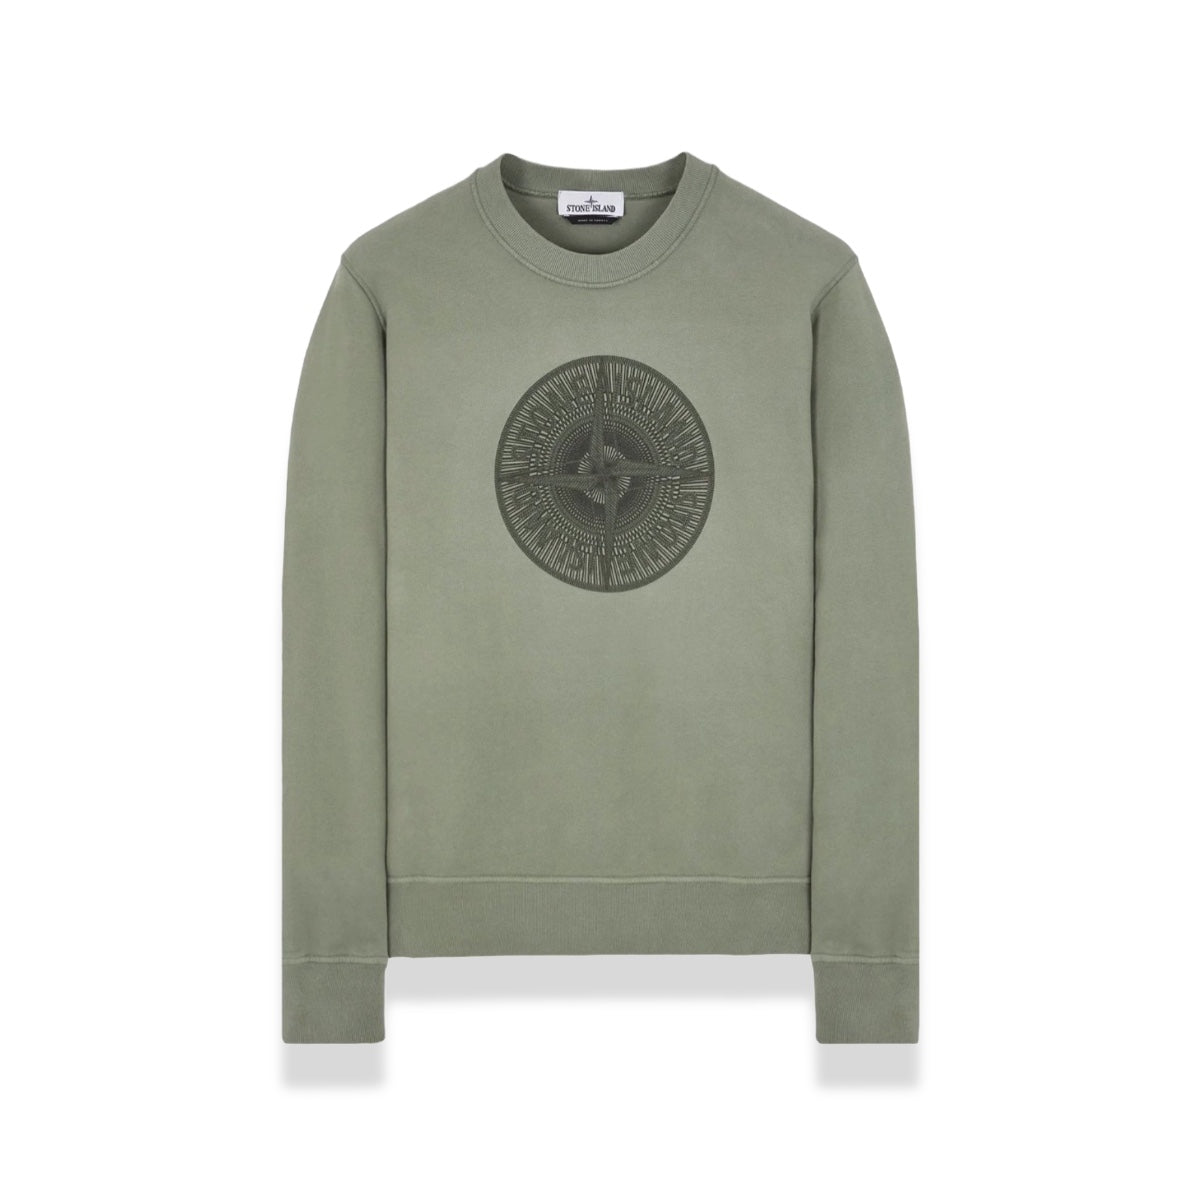 Stone Island - Industrial Logo Sweatshirt Olive Green